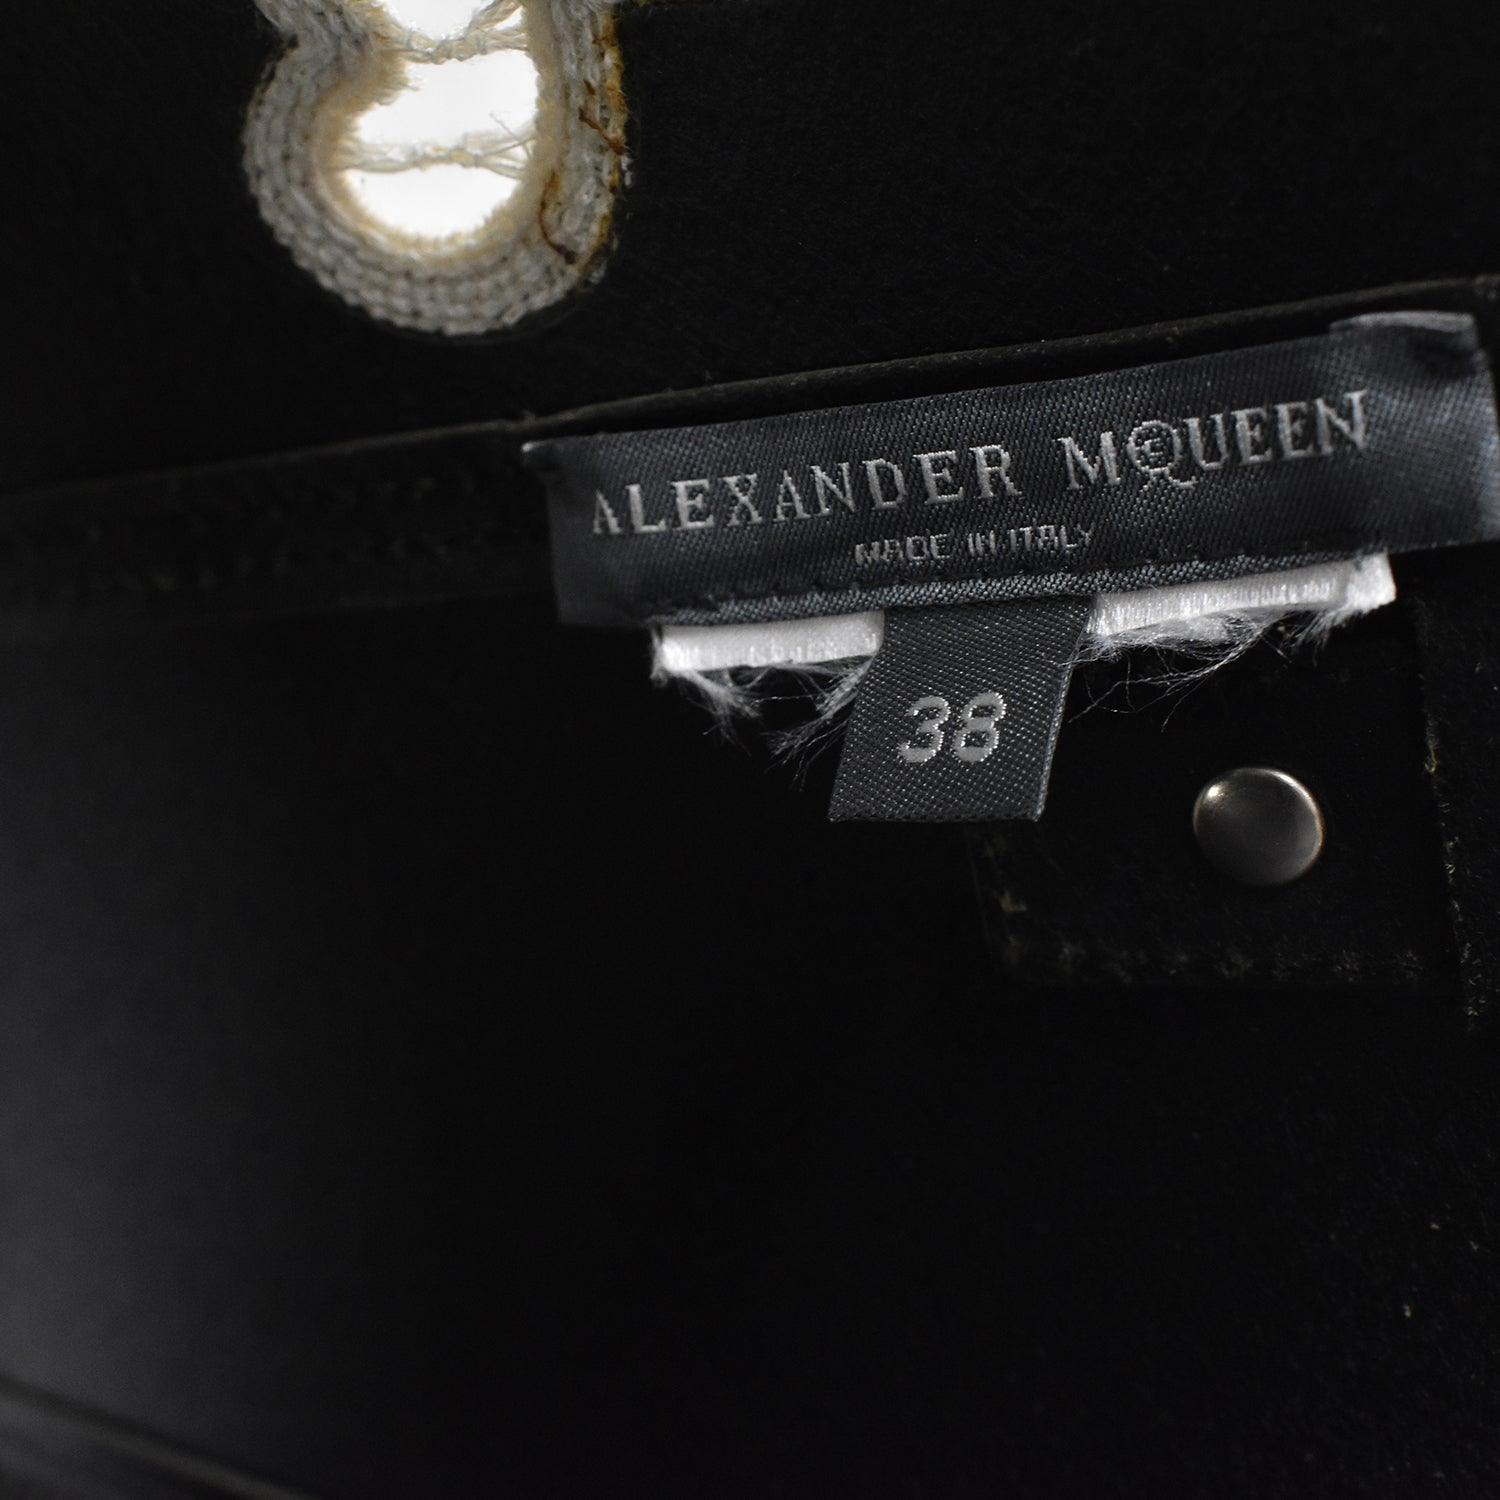 Alexander McQueen Bustier Top - Women's 38 - Fashionably Yours